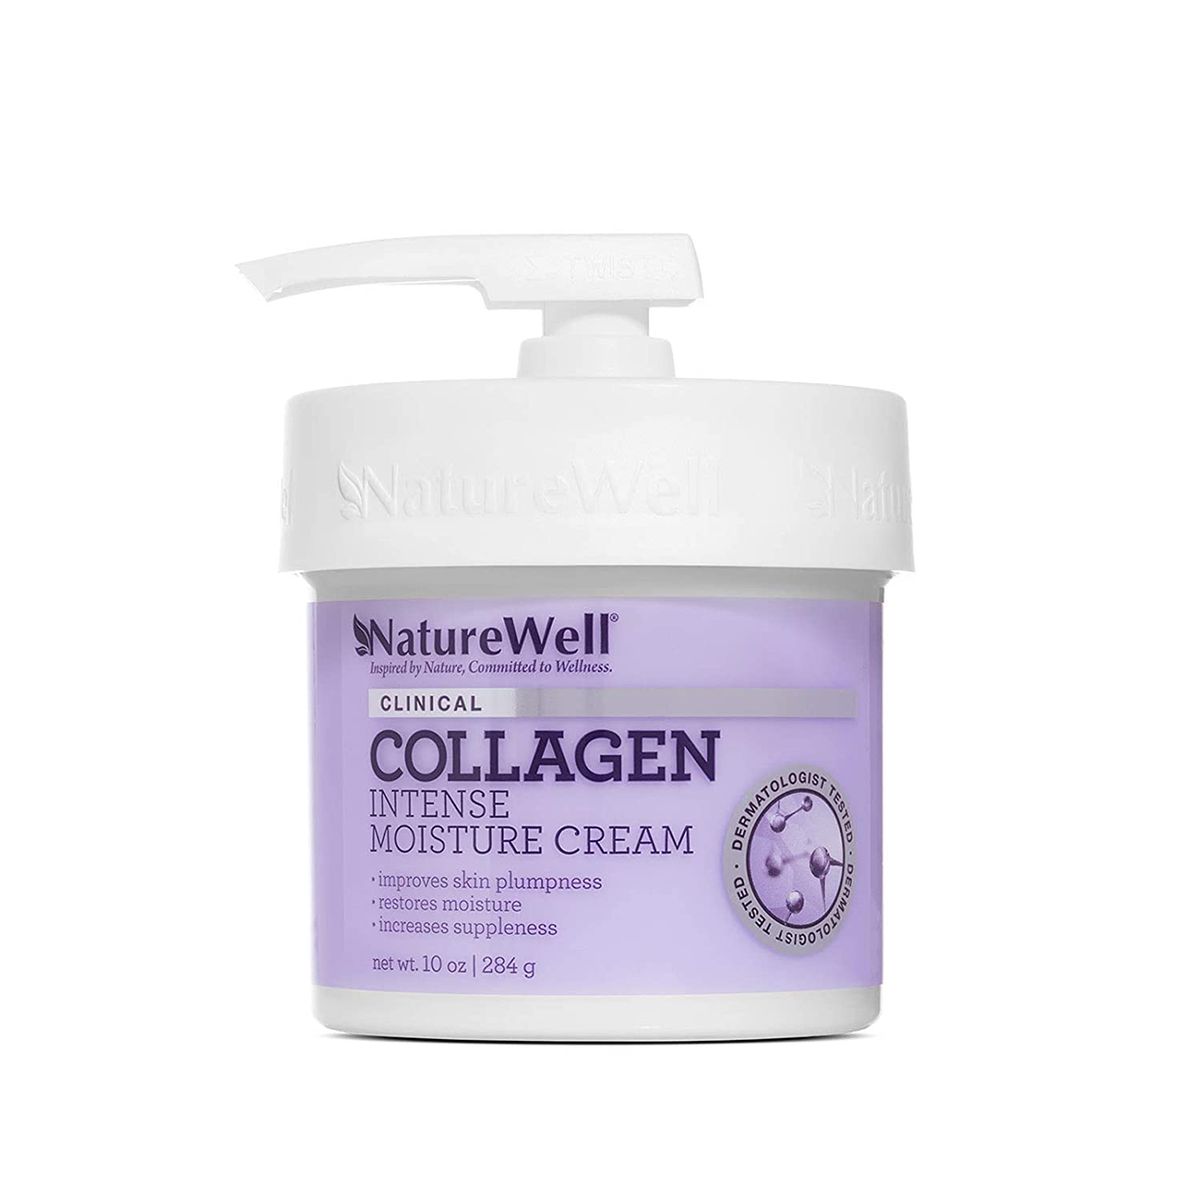 NatureWell Collagen Intense Moisture Cream